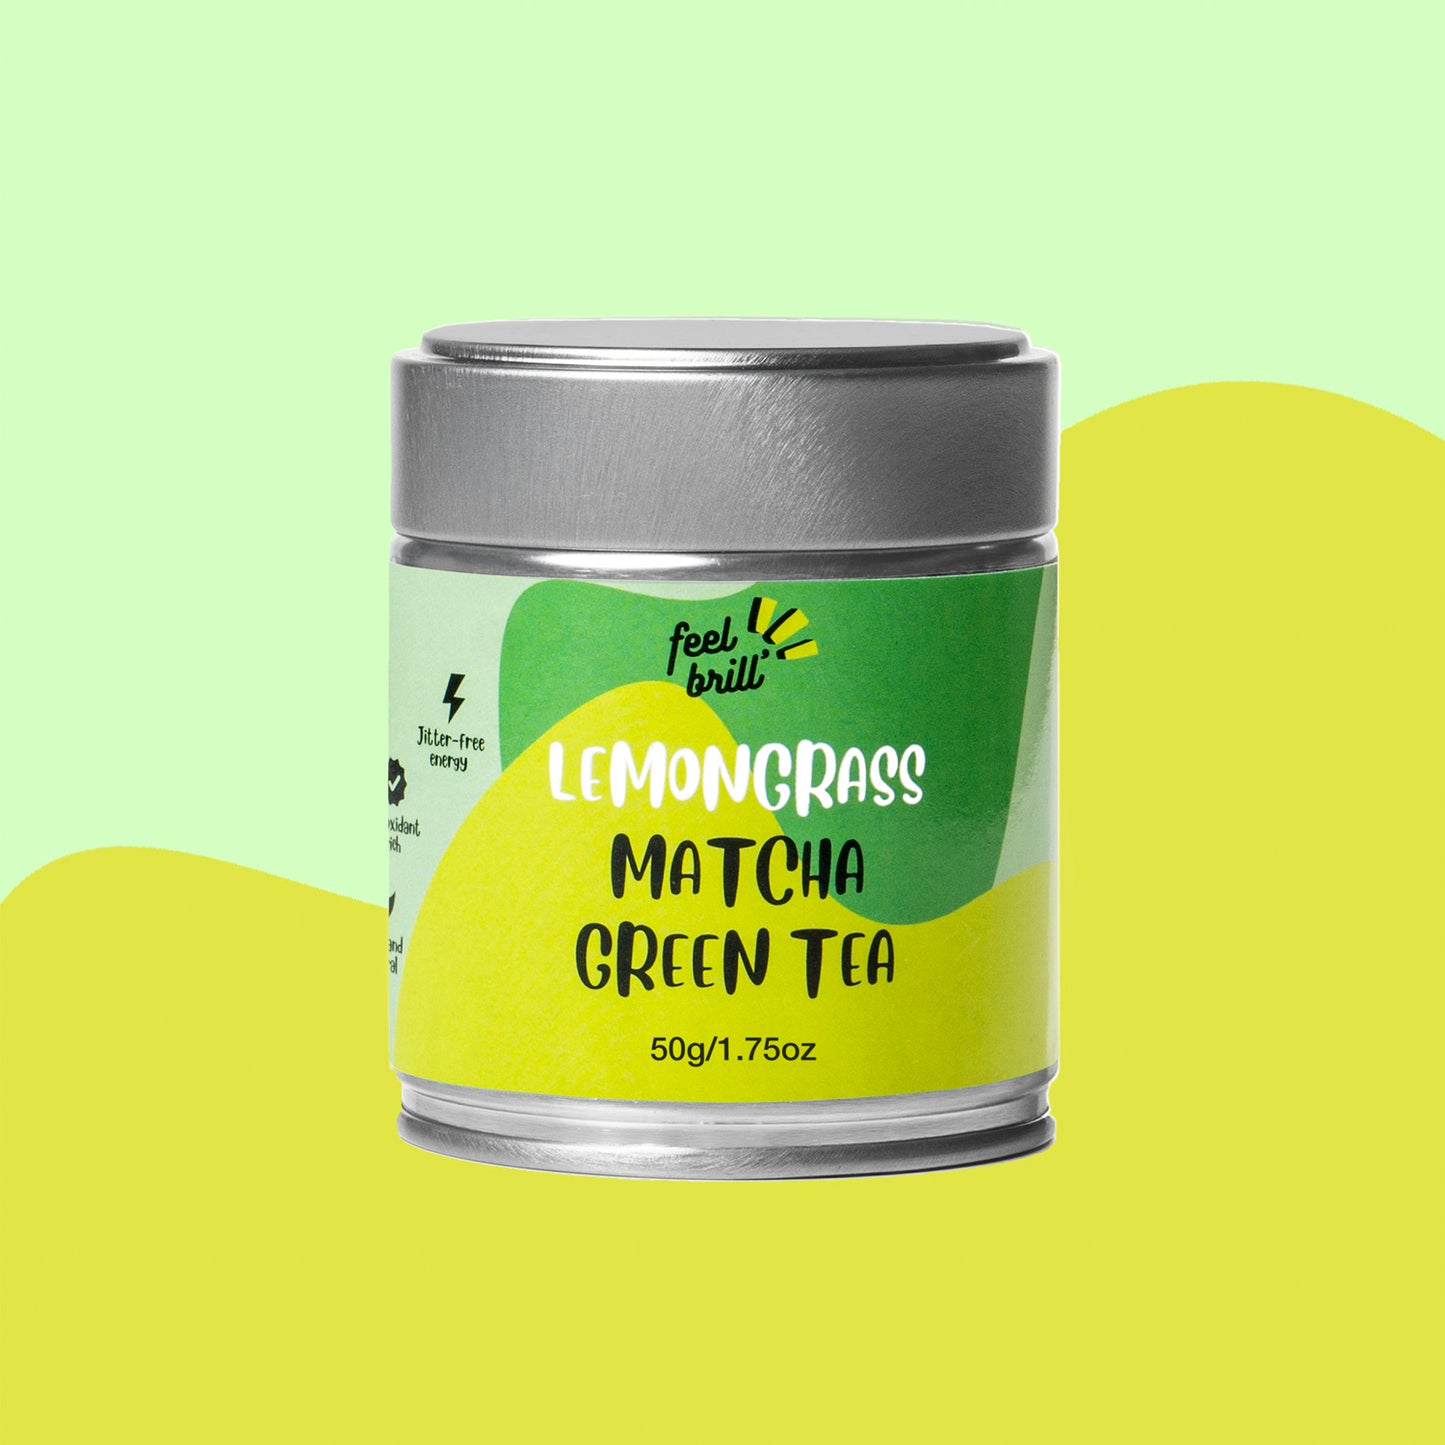 Matcha arbata su citrinzole - matcha with lemongrass - feel brill